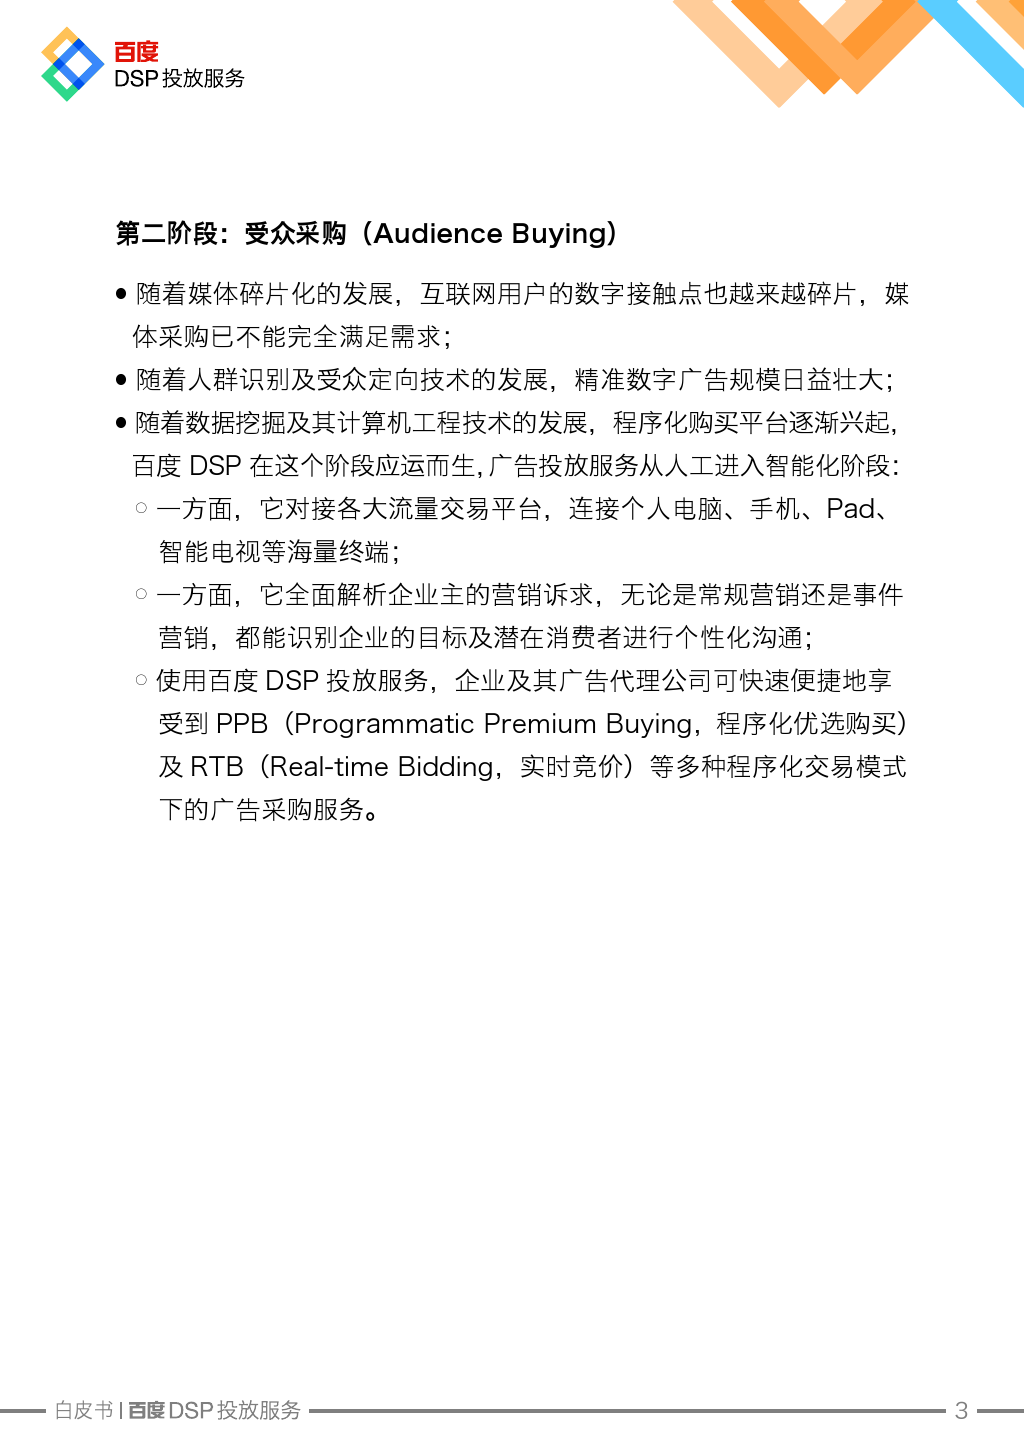 Baidu DSP Service White Paper_000004